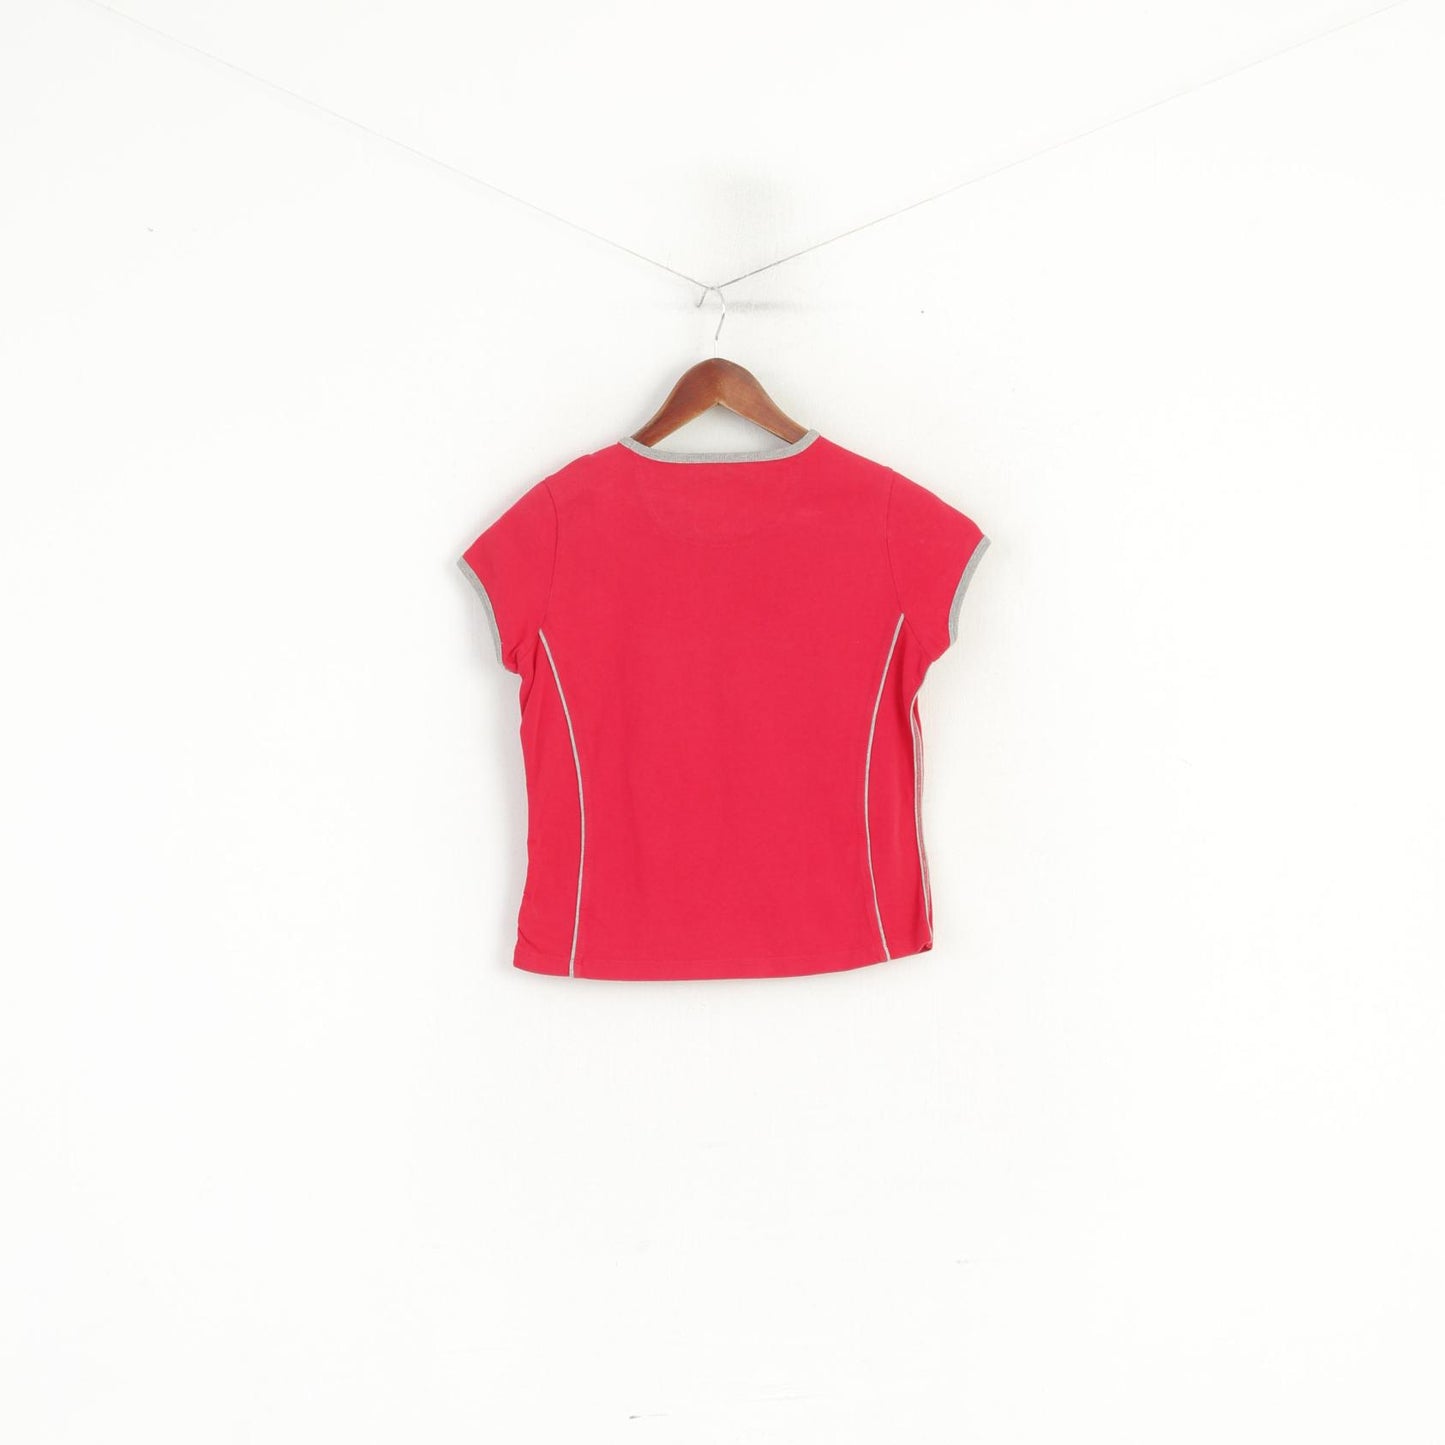 Champion Women S Shirt Raspberry Cotton Cropped Heritage Classics Sport Top